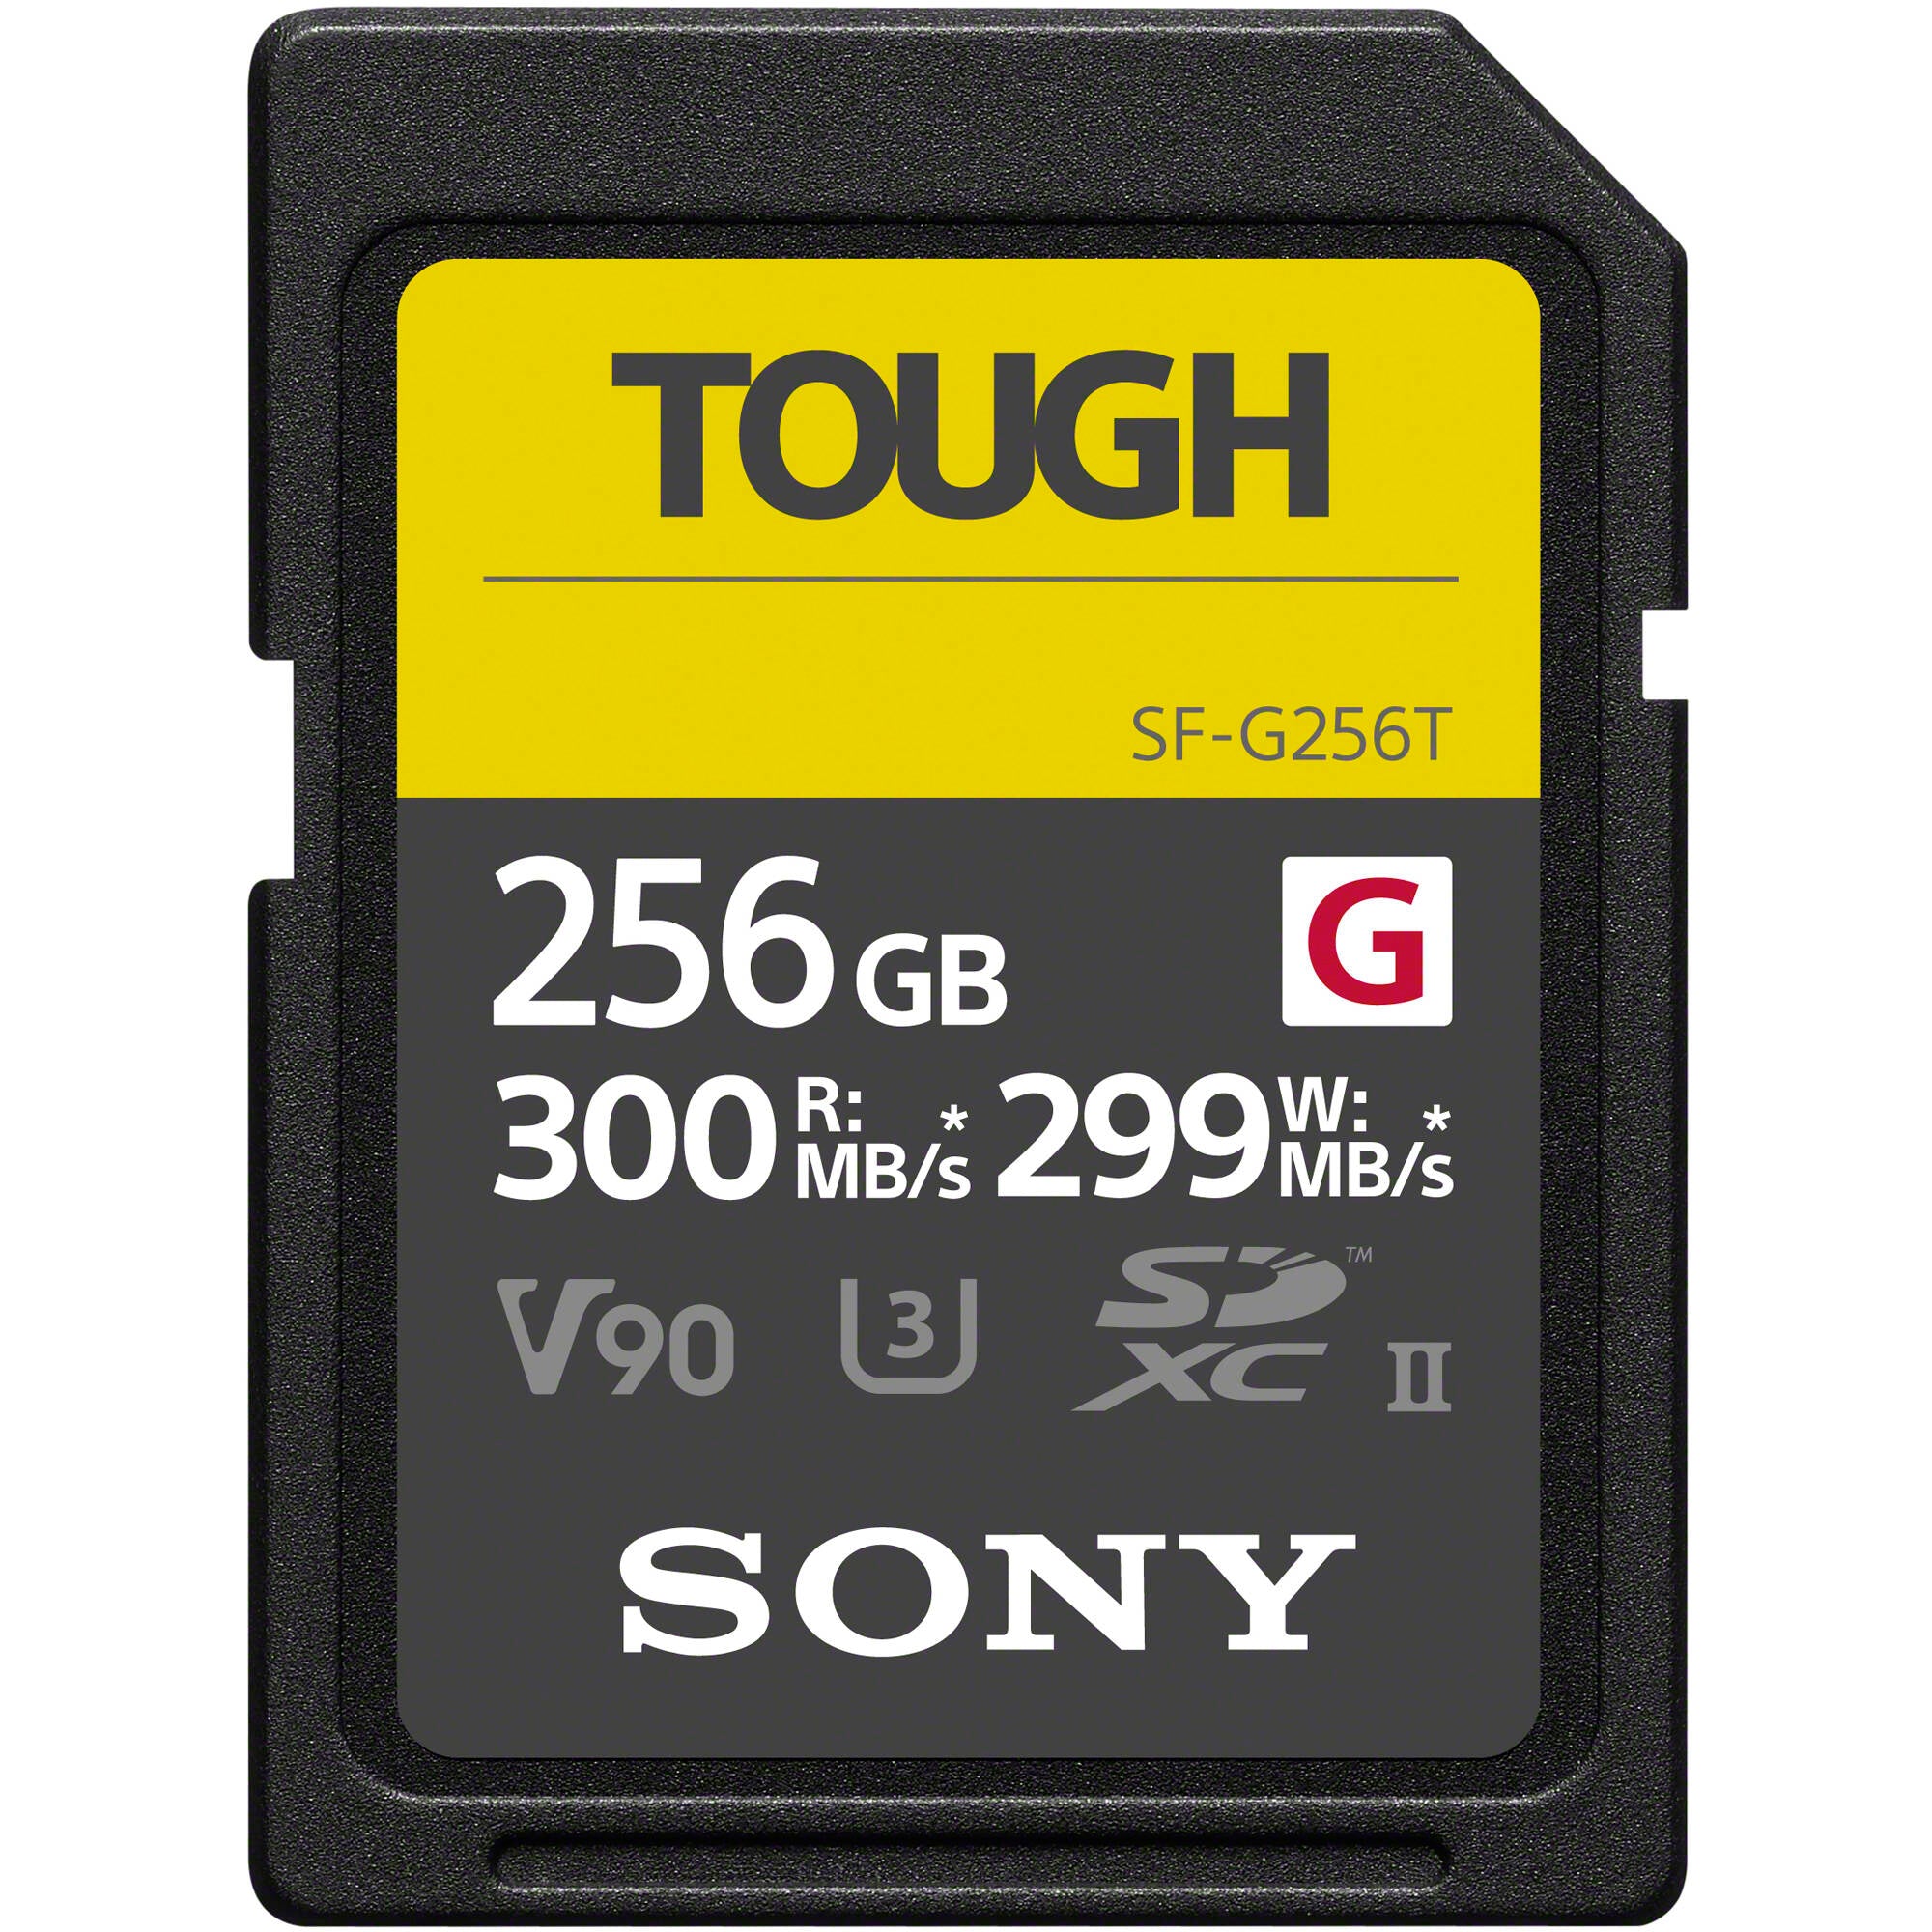 Sony SF-G TOUGH Series UHS-II SDXC Memory Card - 256GB